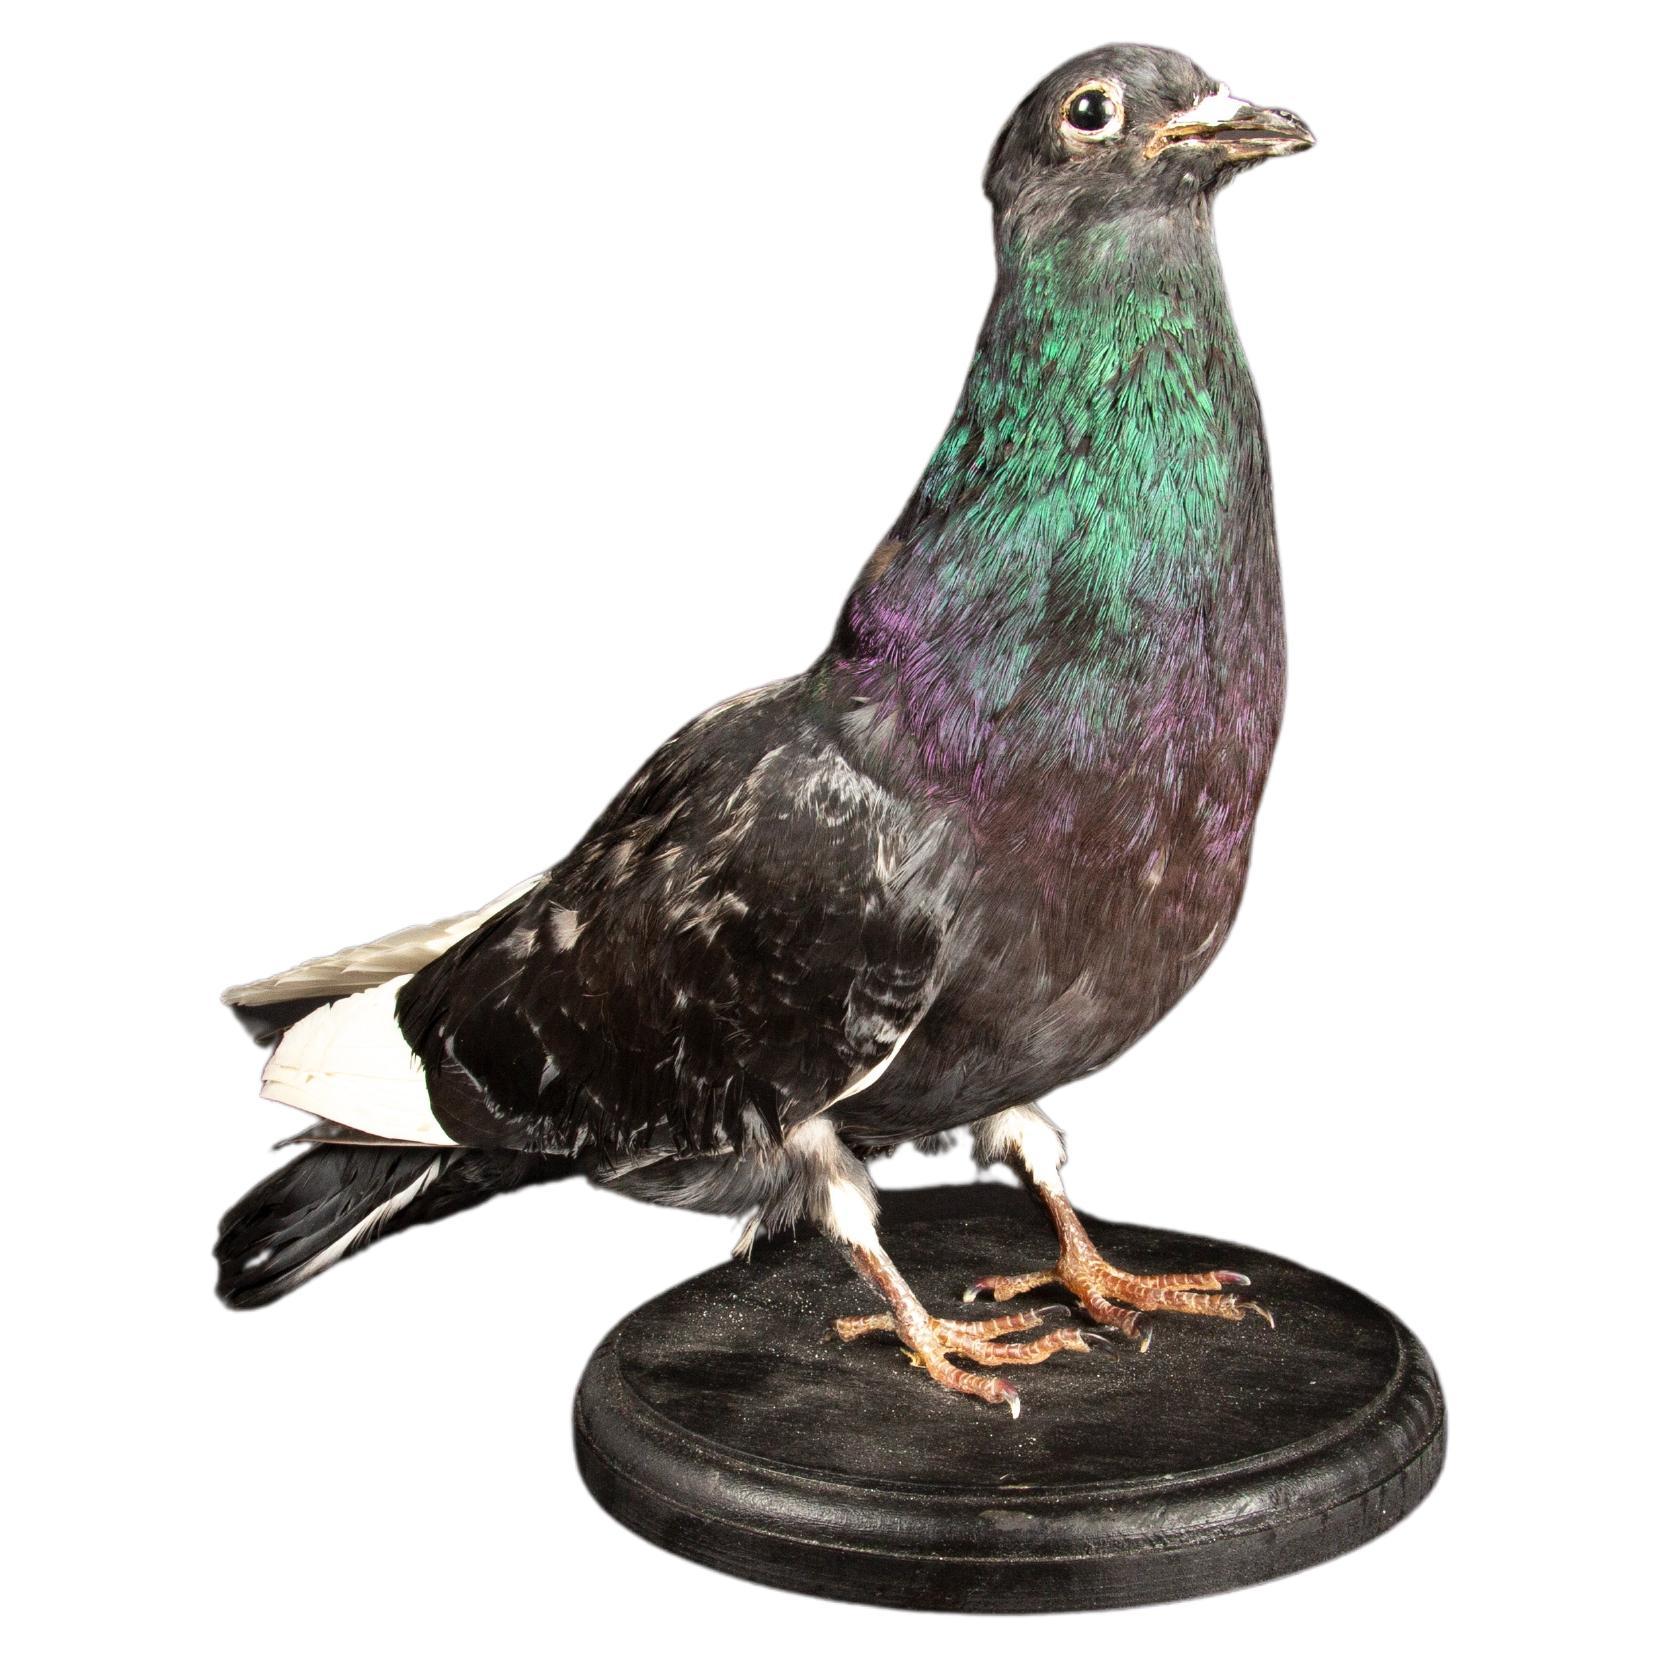 City Slicker Chic: The 'Urban Avian Odyssey' Pigeon Taxidermy